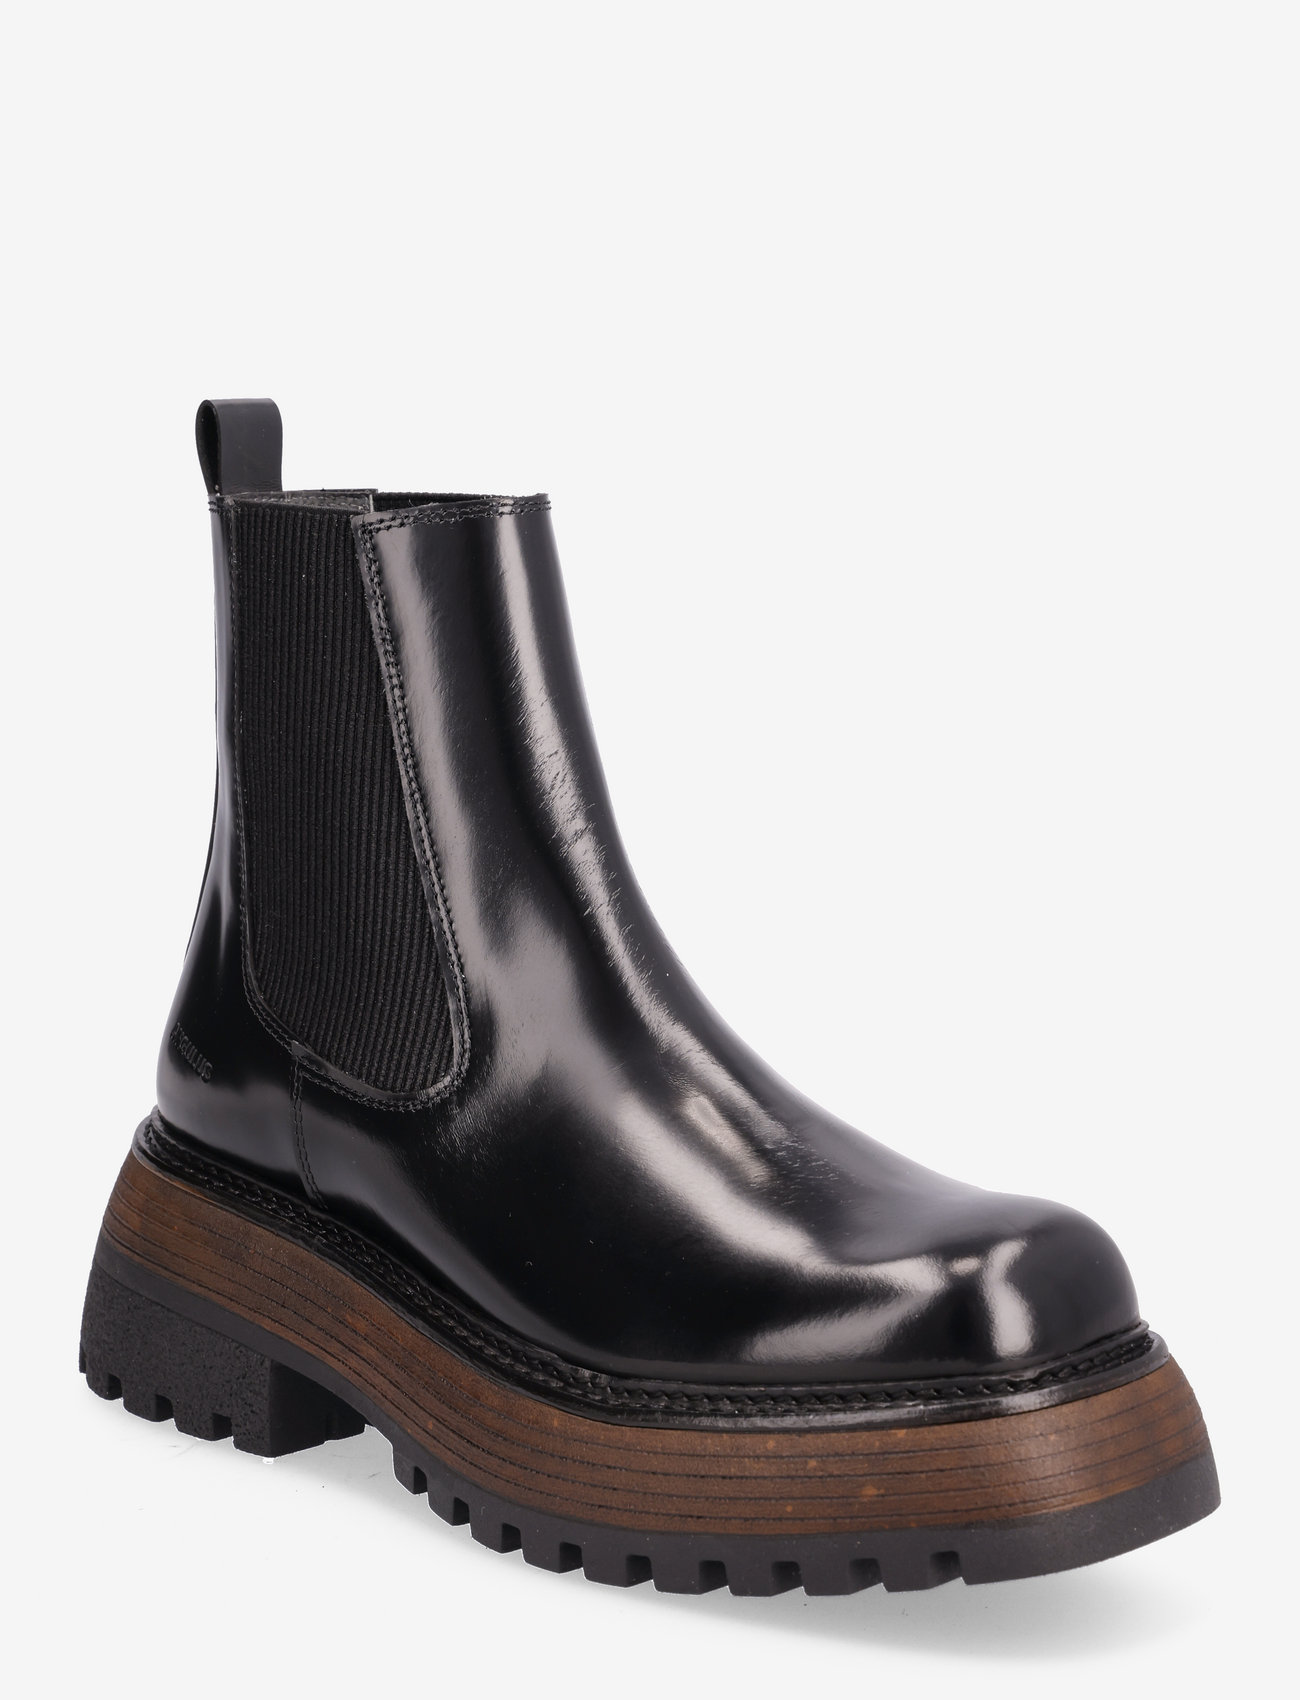 ANGULUS - Boots - flat - chelsea stila zābaki - 1425/019 black/black - 0